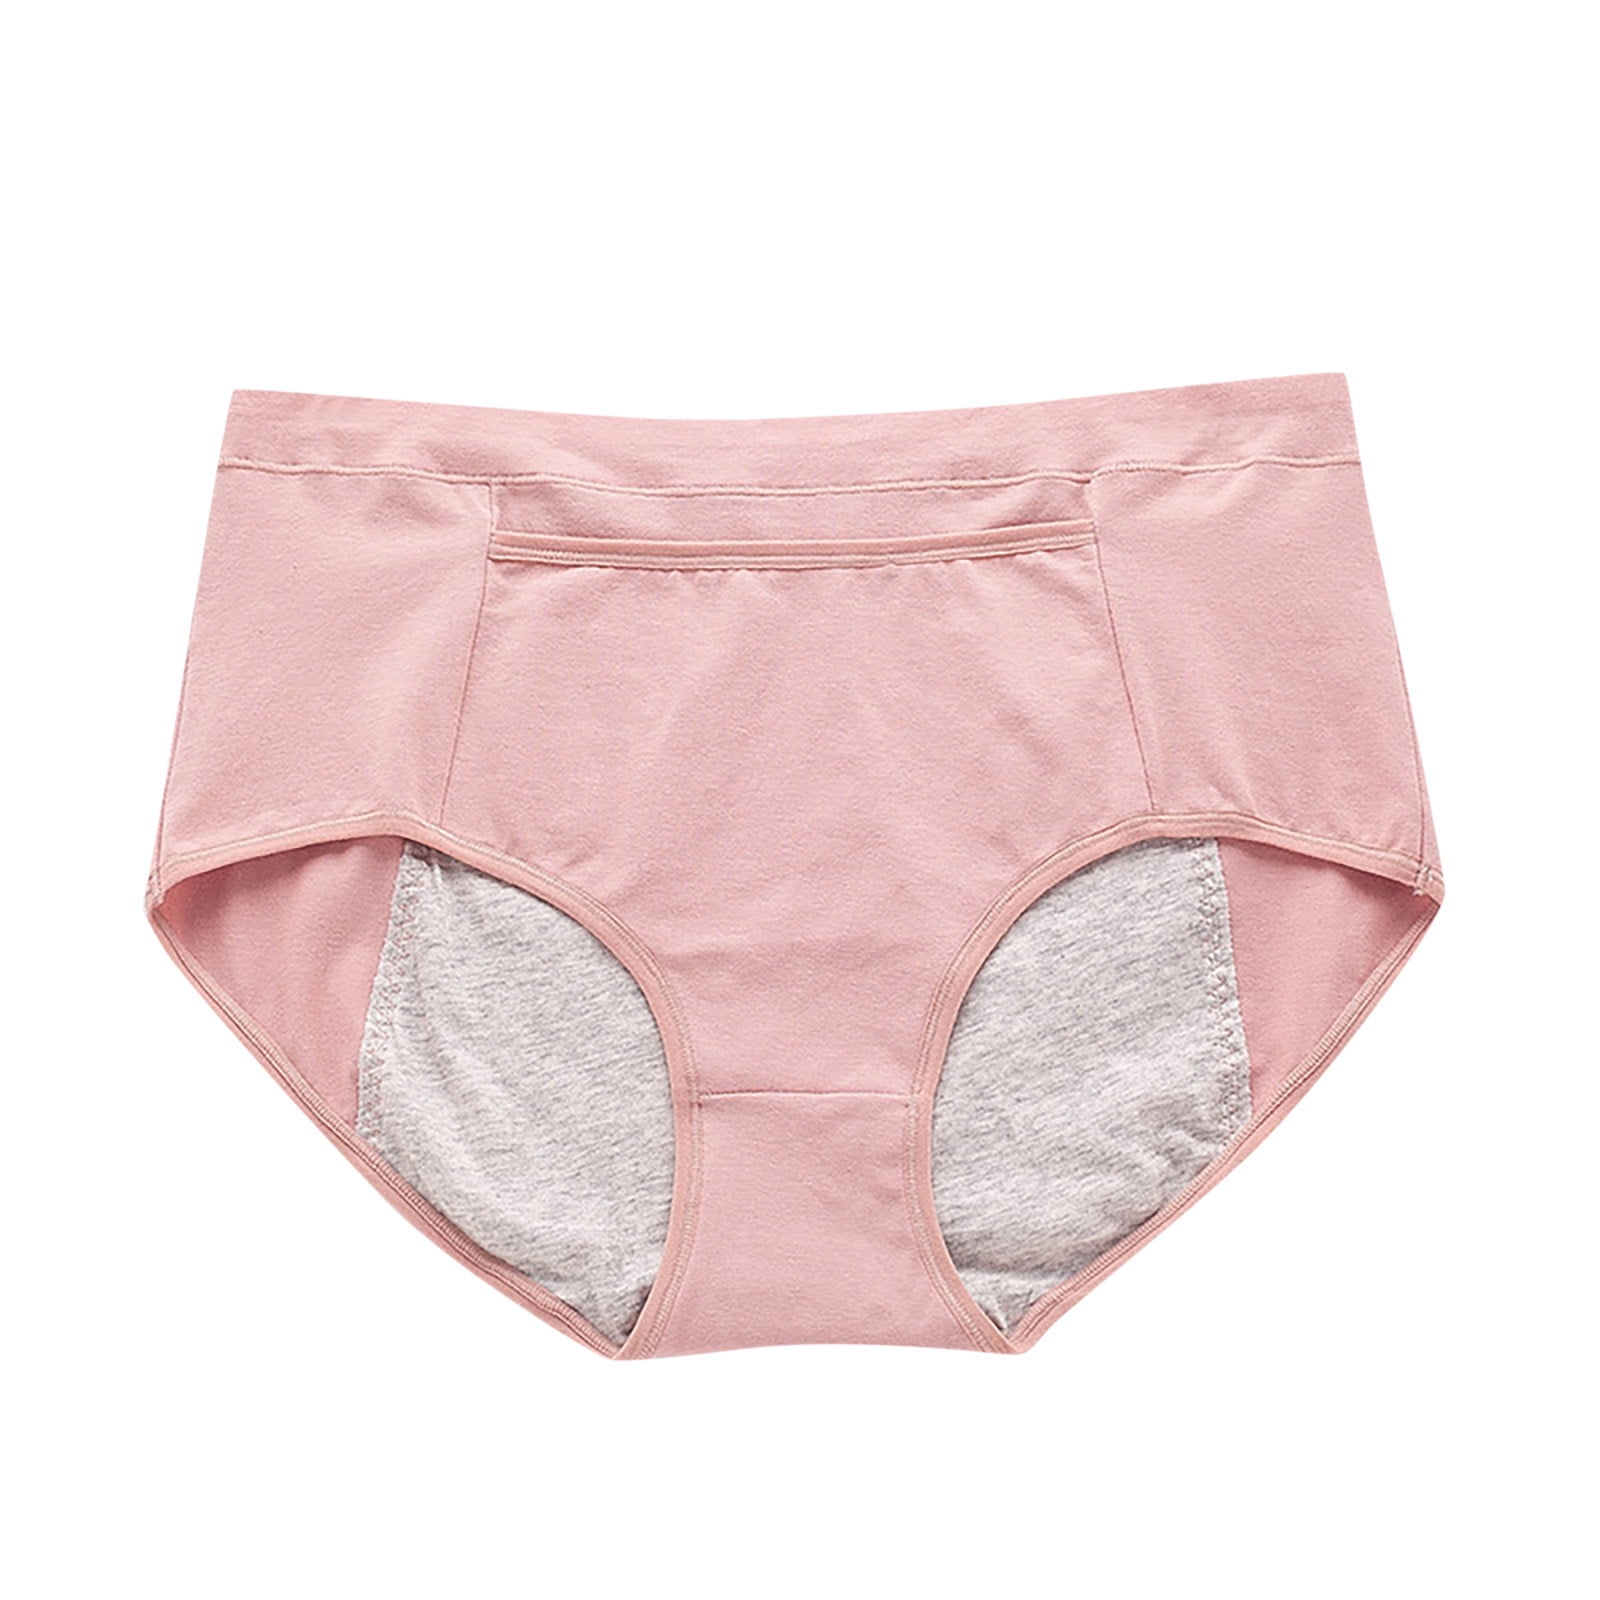 adviicd High Waist Panties Teen Girls Underwear 4Panties Leak-Proof Organic  Cotton Protective Briefs Hot Pink Small